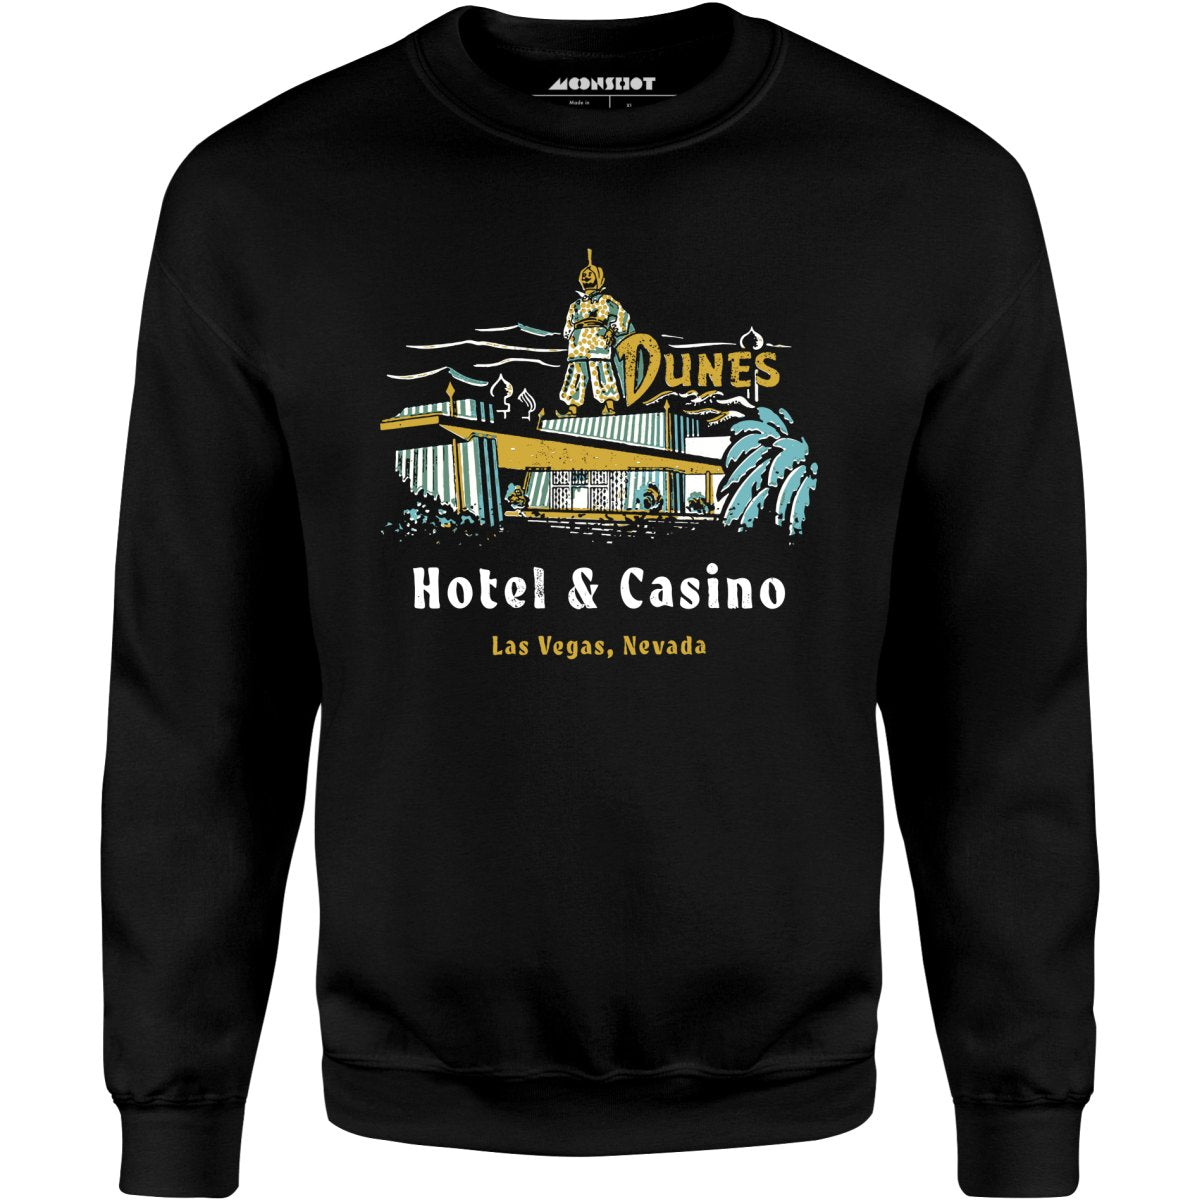 Dunes Hotel & Casino - Vintage Las Vegas - Unisex Sweatshirt